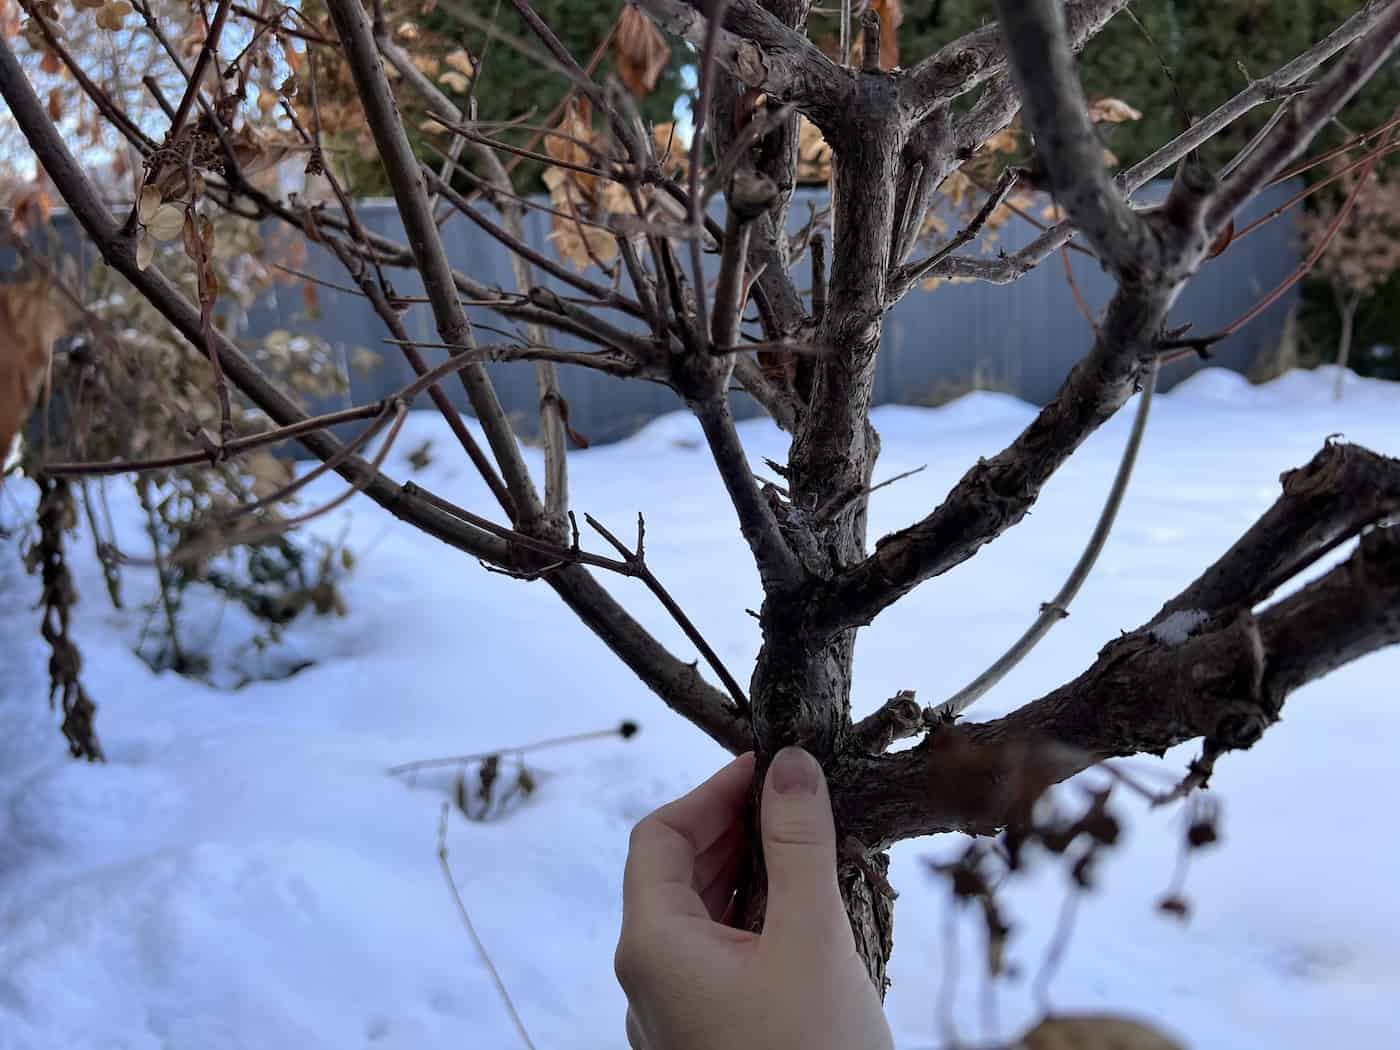 Examining structure of hydrangea tree main branches